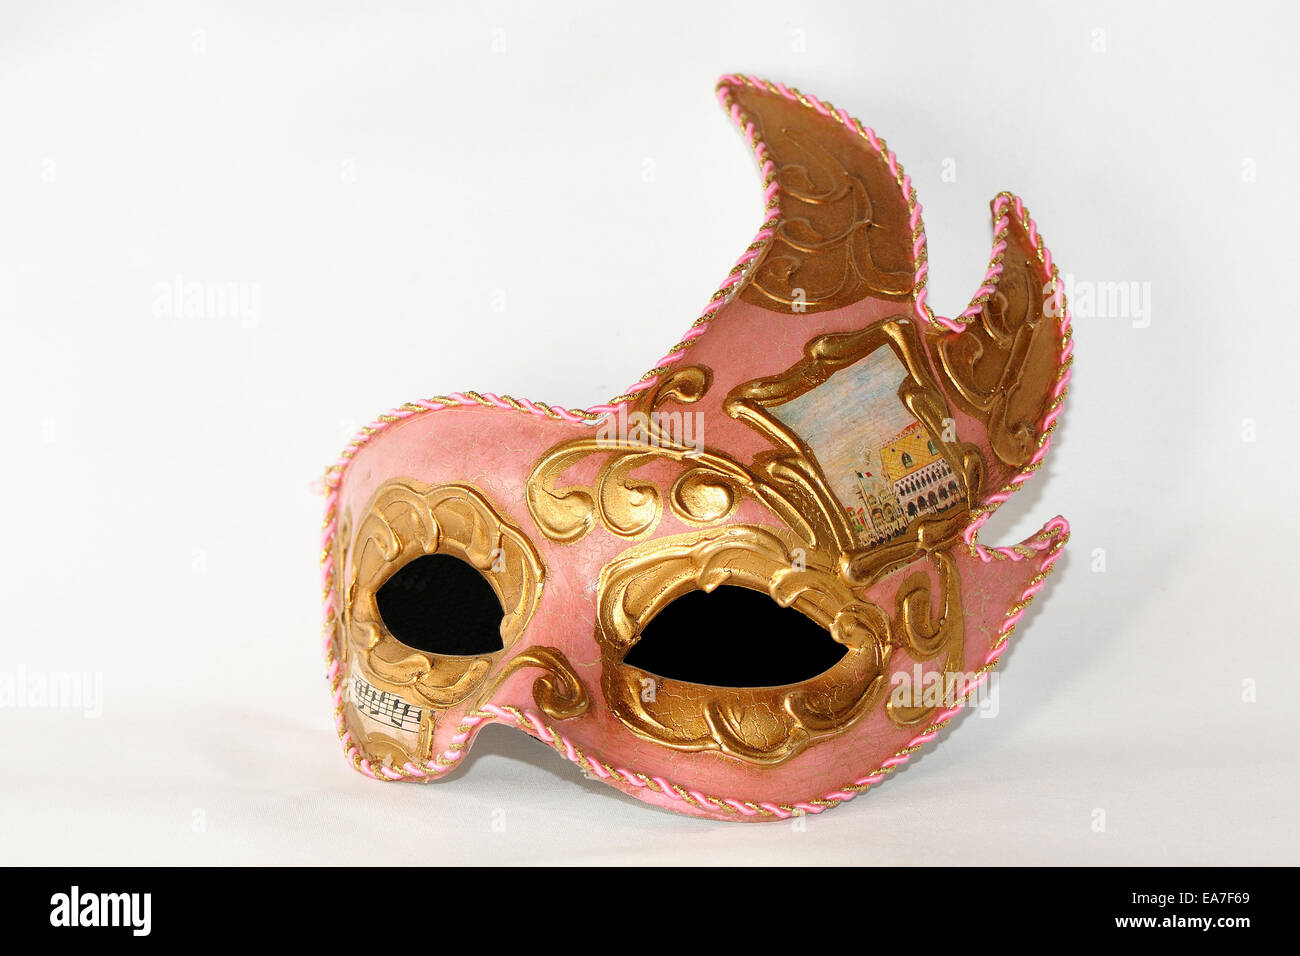 Pink and gold masquerade ball mask decoration Stock Photo